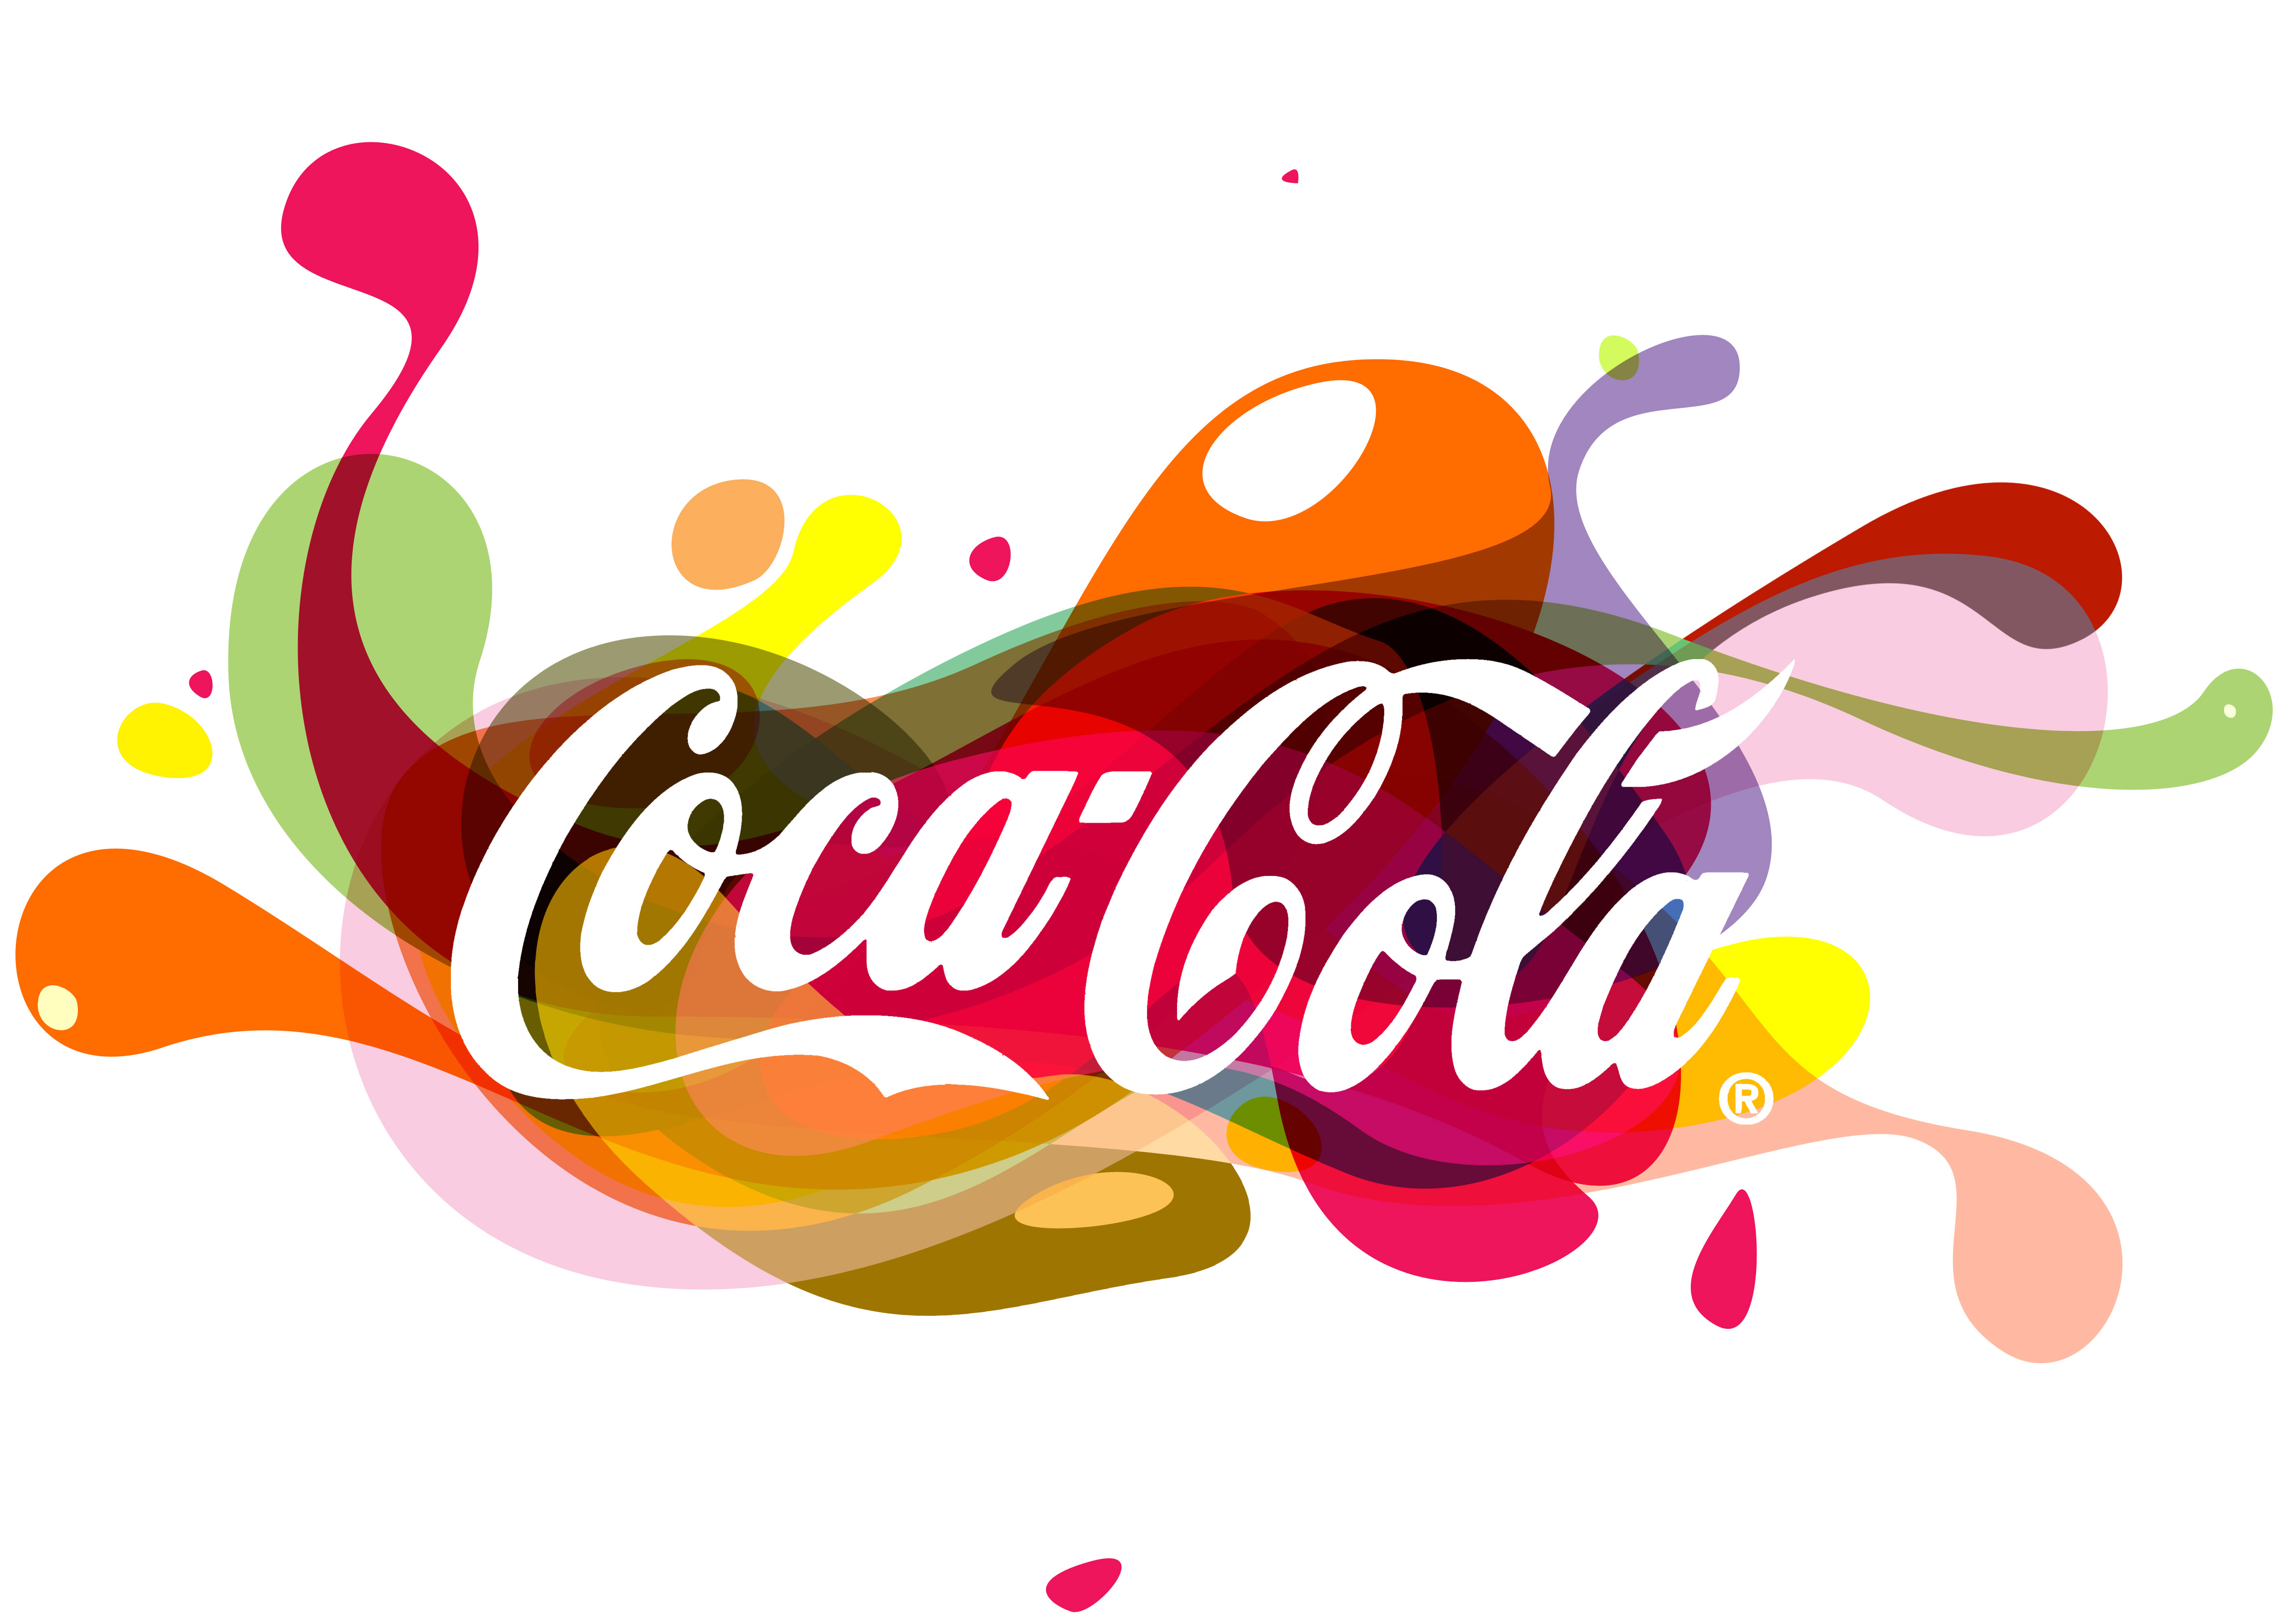 Coca Cola By Engin Korkmaz At Coroflot Com